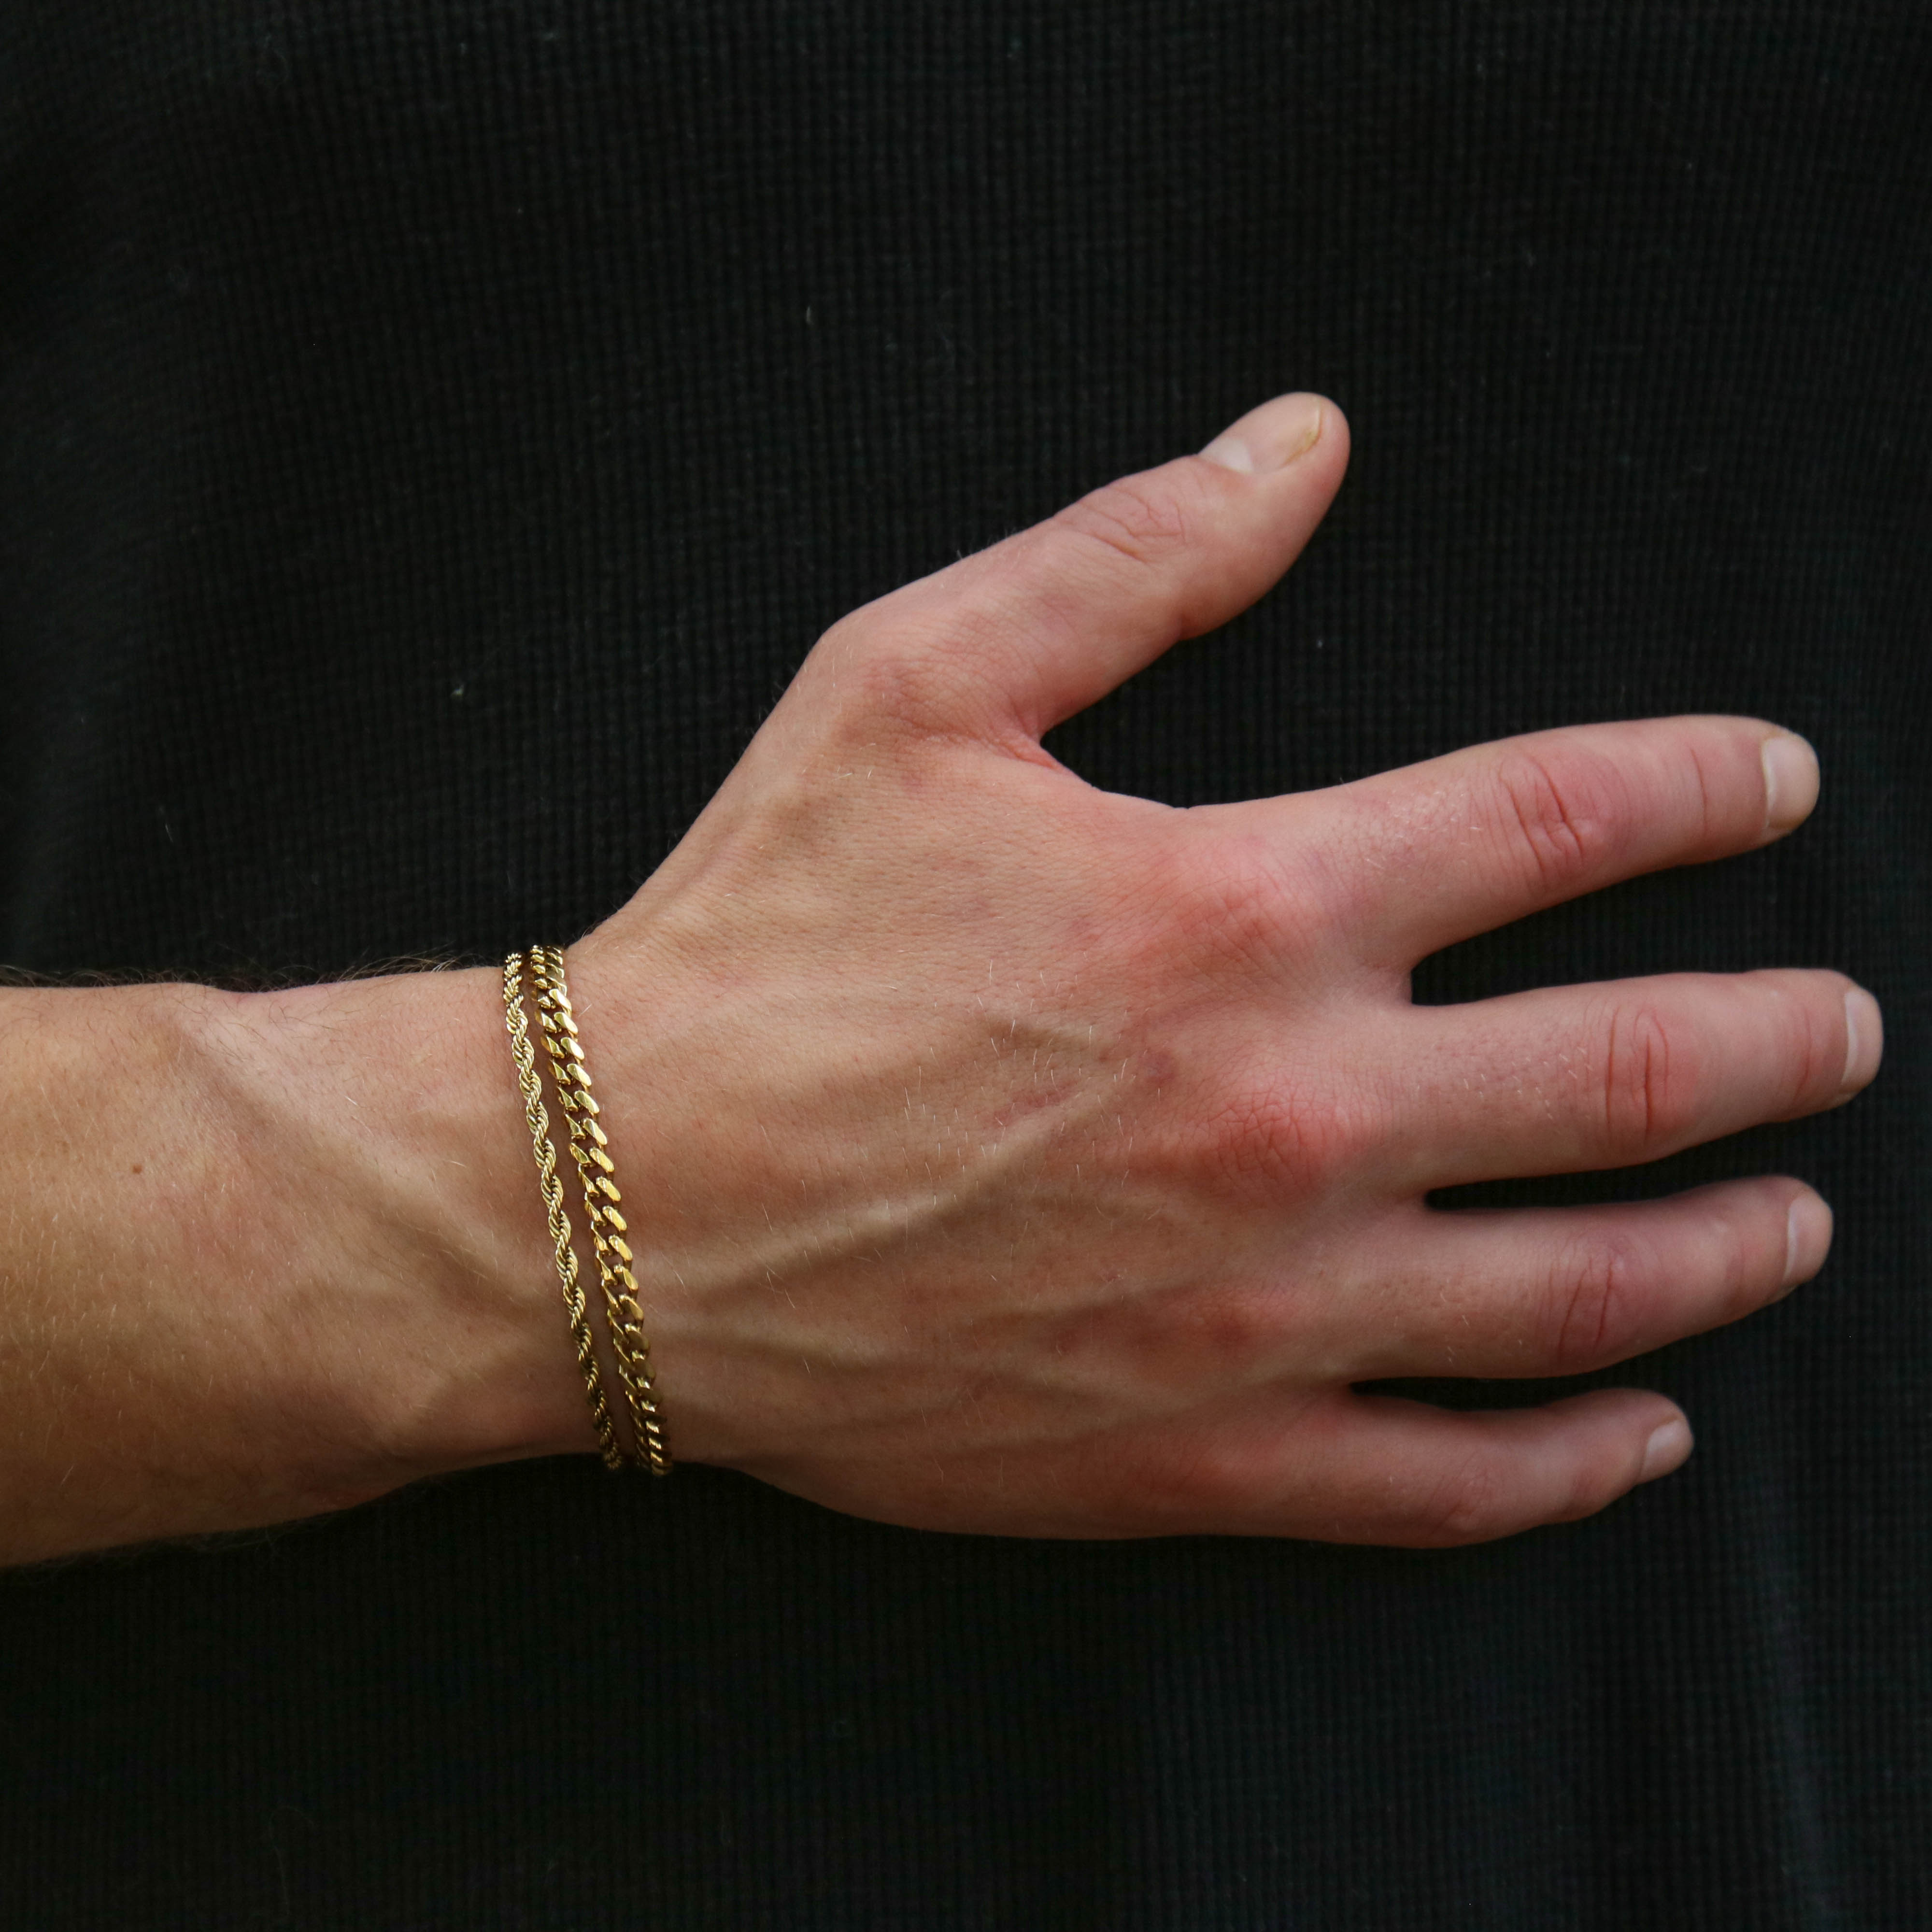 18 K Gold Plated Diamond cut rope chain bracelet and 5mm Cuban chain bracelet.